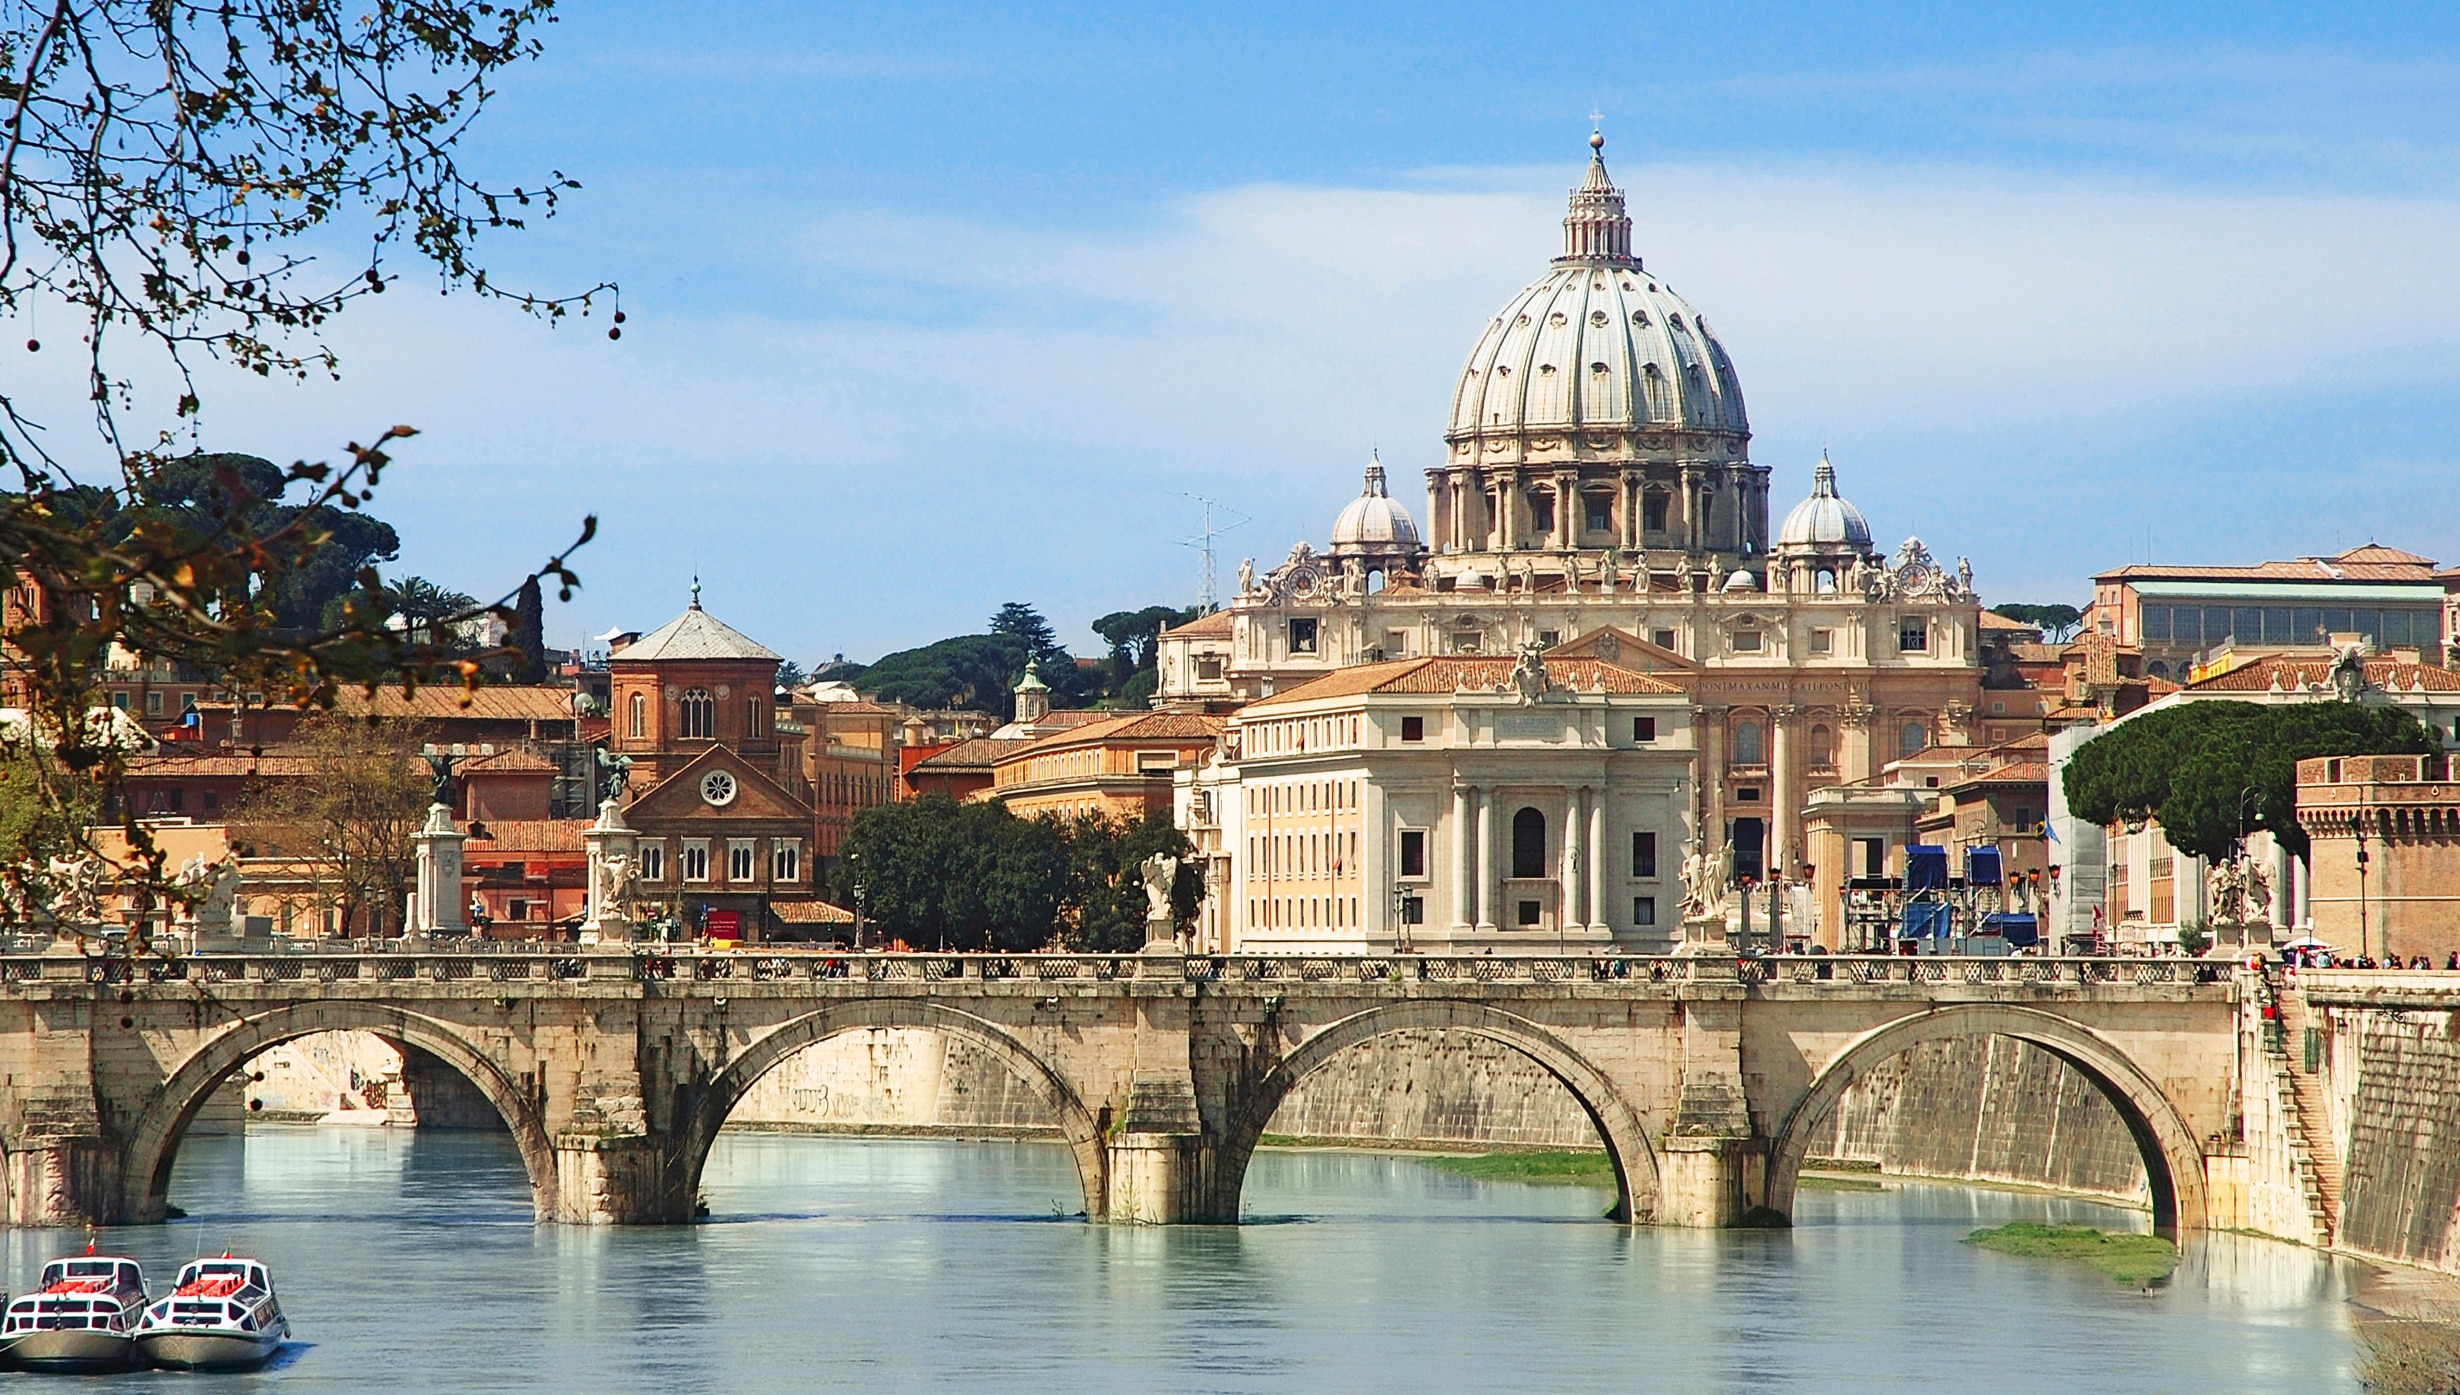 St. Peter’s Basilica, Rome – Italy | Mediterranean Cruises